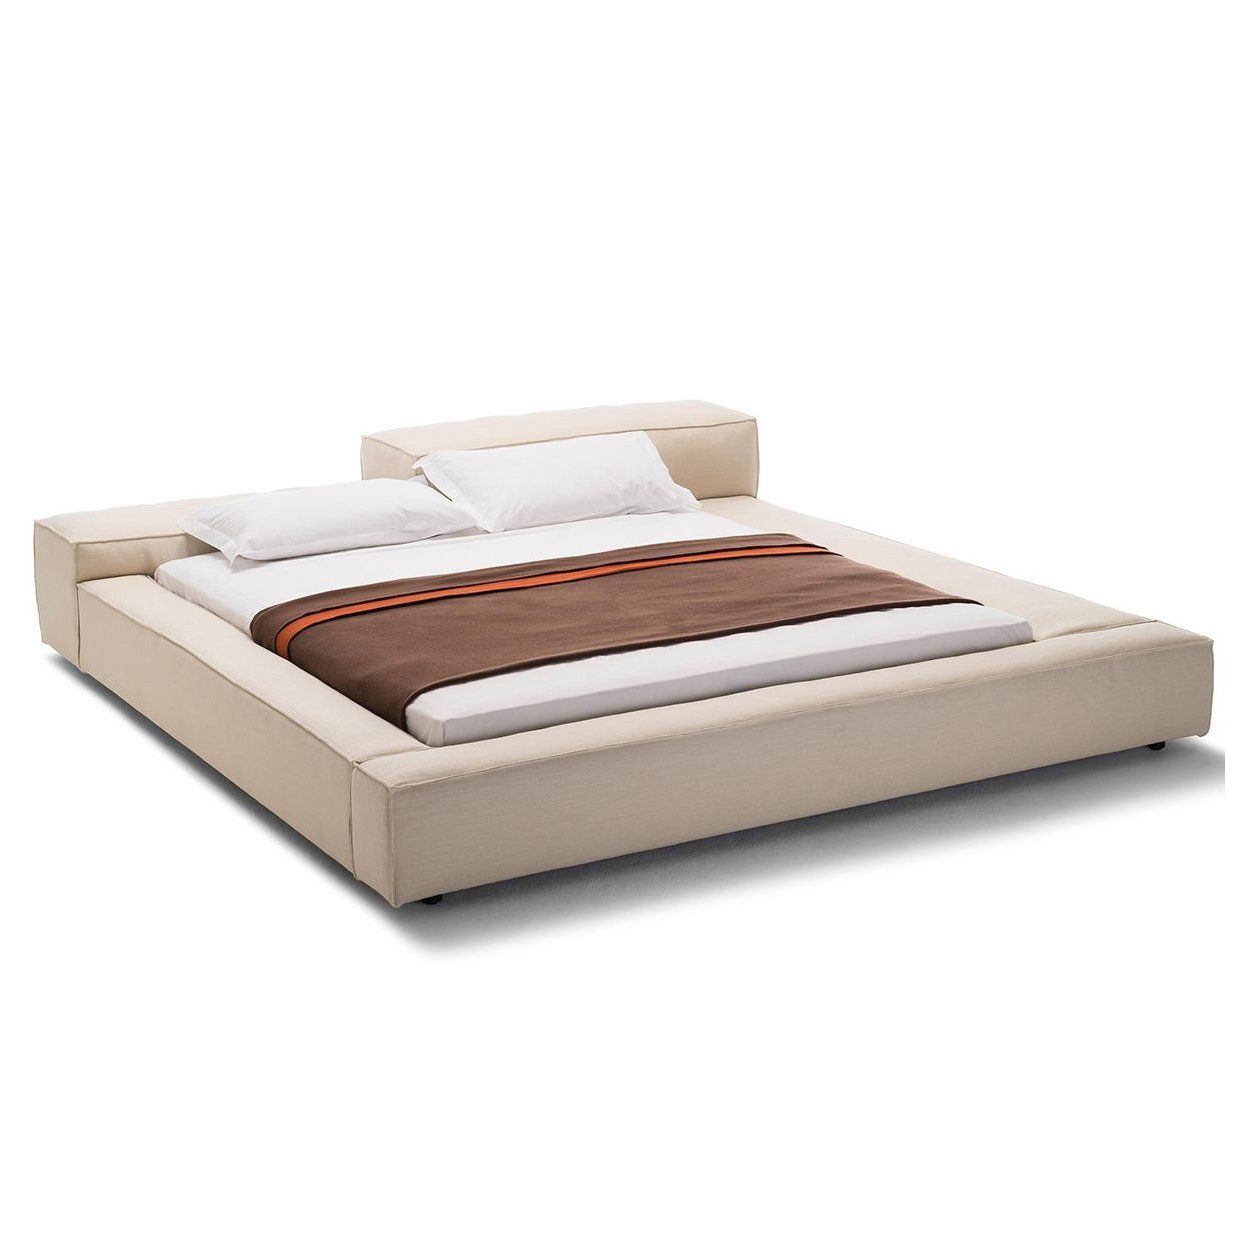 Double bed 160x200 beige Extrasoft